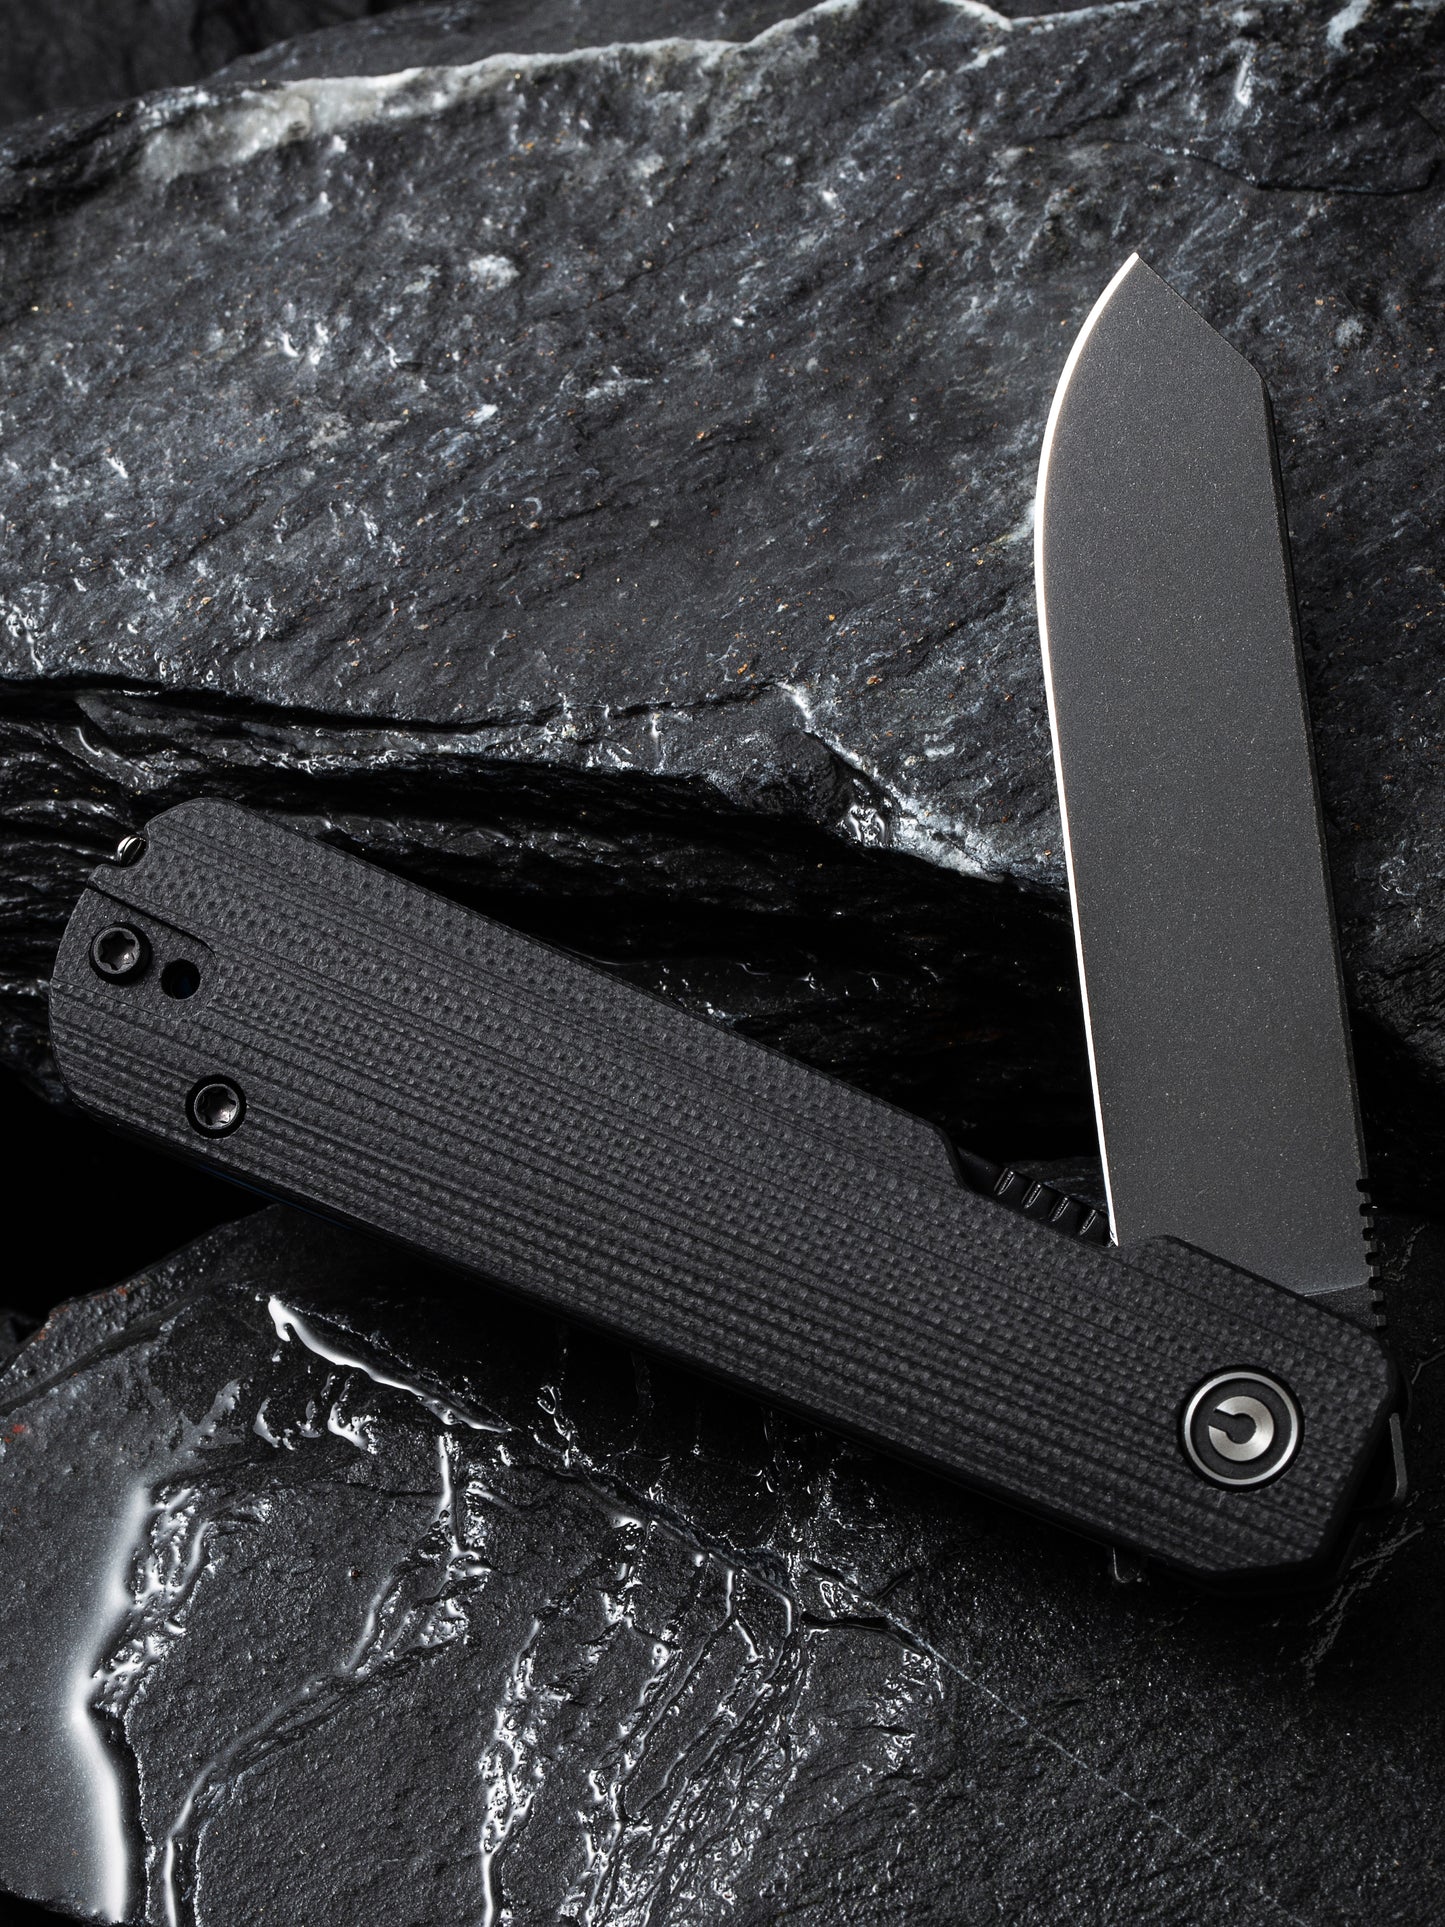 Civivi Sendy 2.83" Nitro-V Milled Black G10 Folding Knife by Ben Peterson C21004B-2